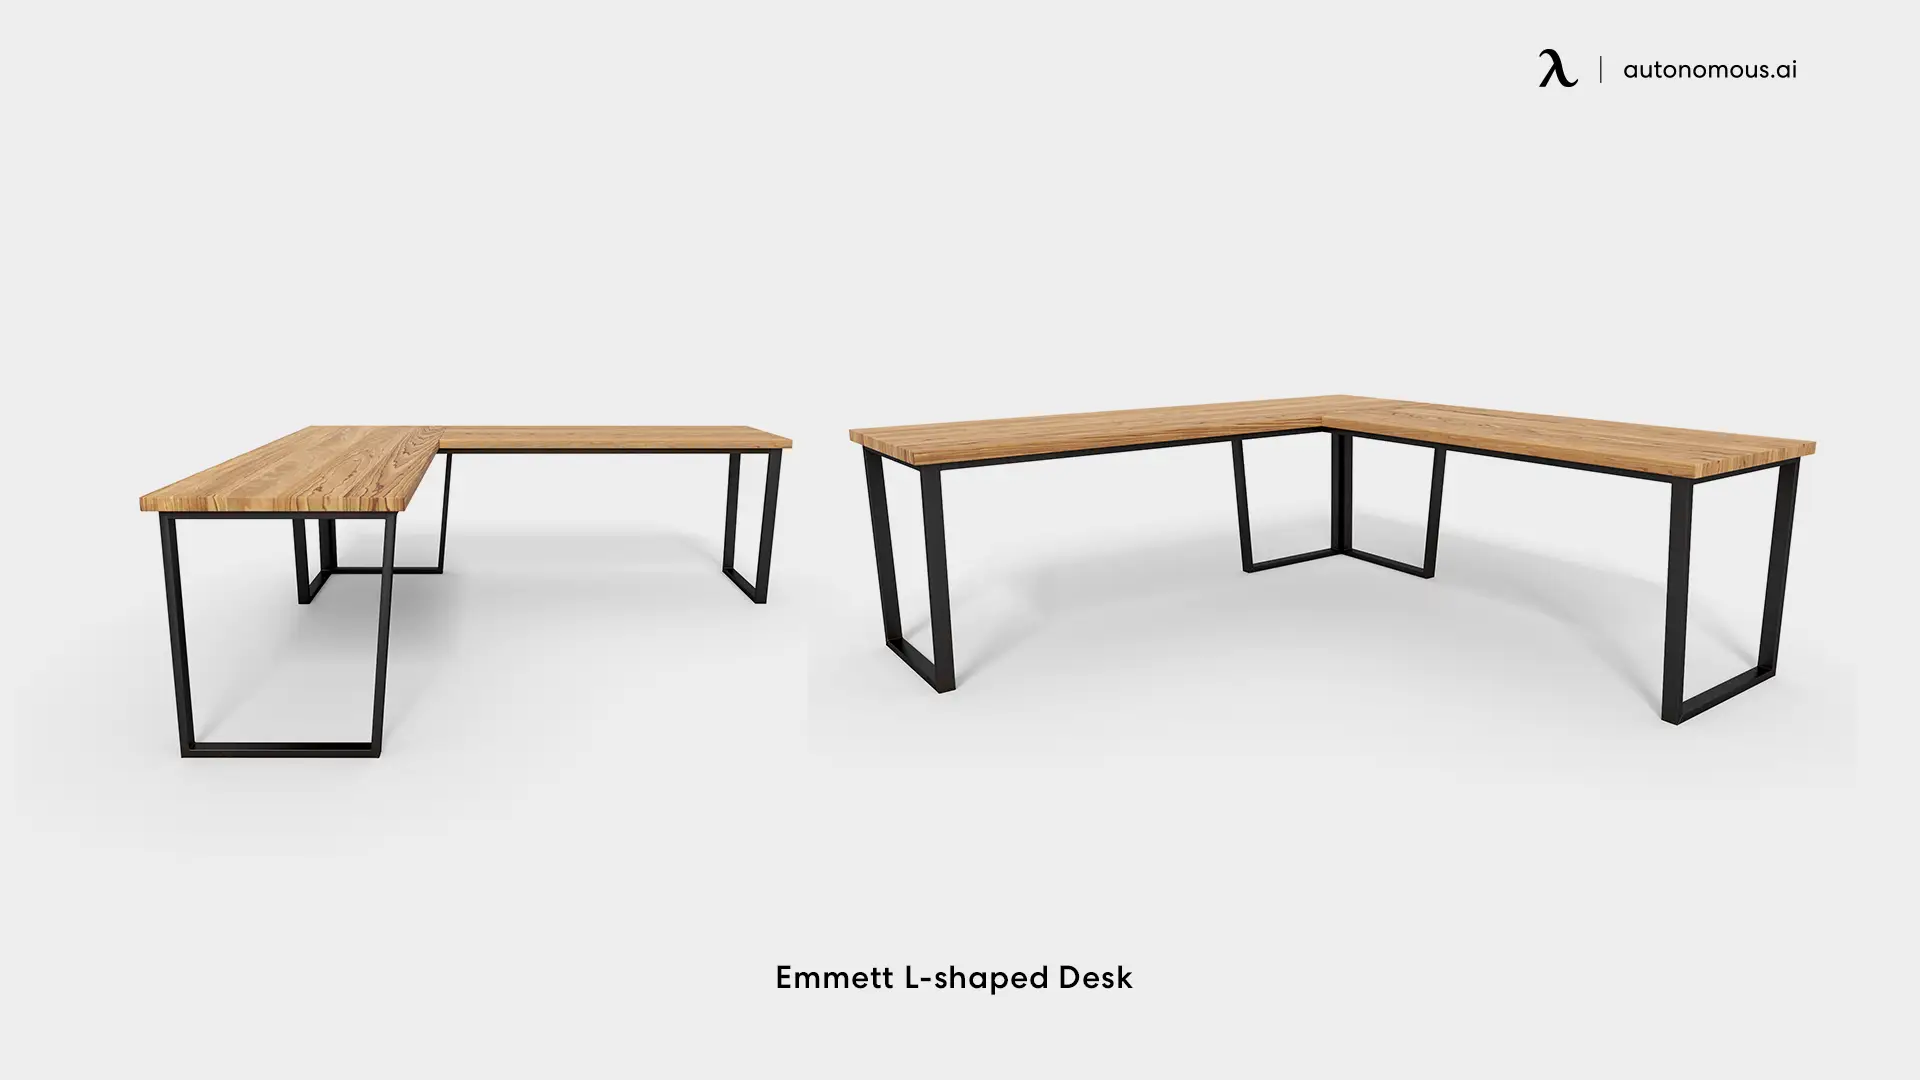 Emmett L-shaped Desk - Black Friday L-shaped desk